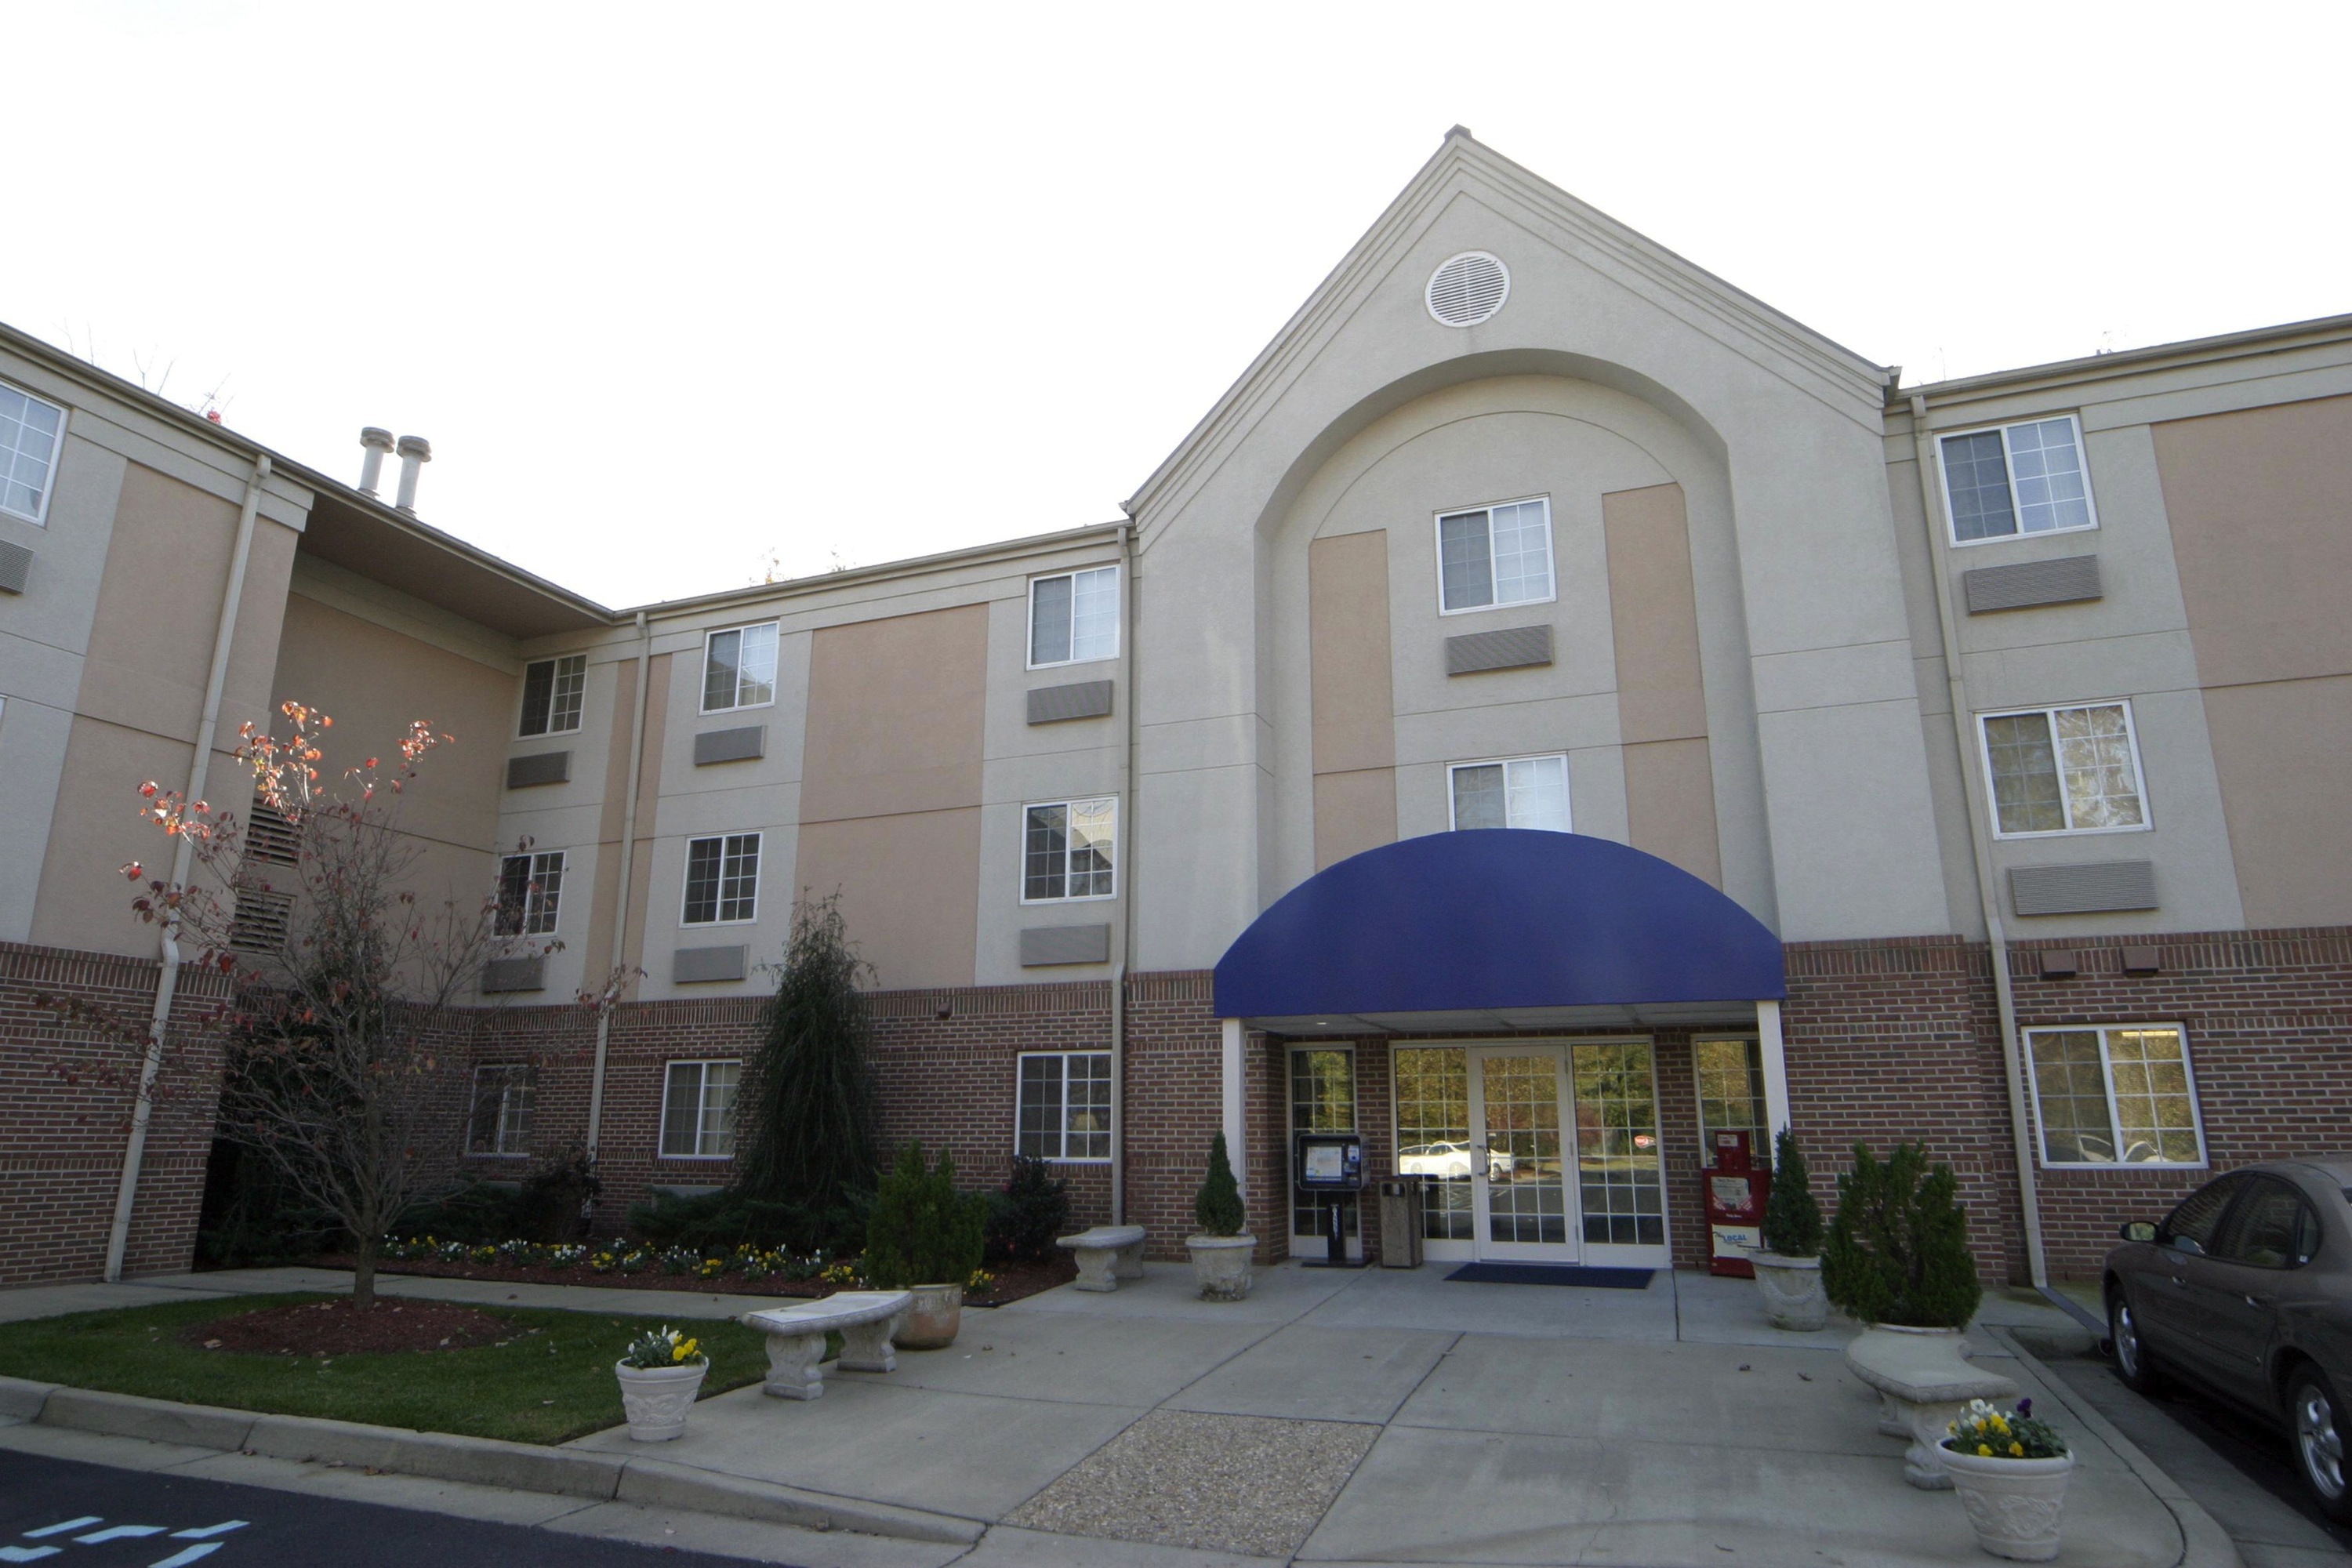 Photo of Candlewood Suites Hampton, Hampton, VA